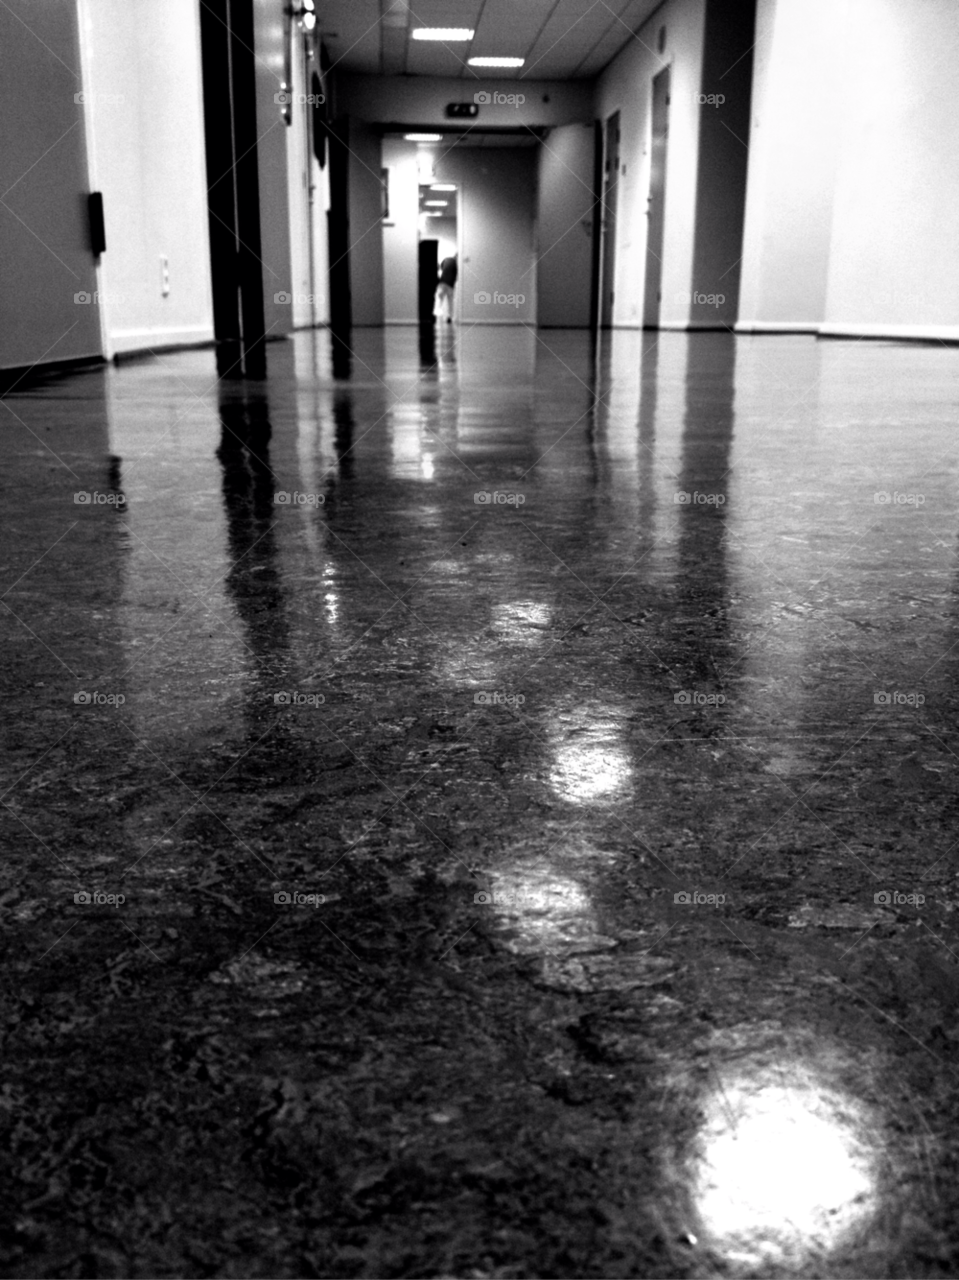 shine floor corridor by Iphonepic